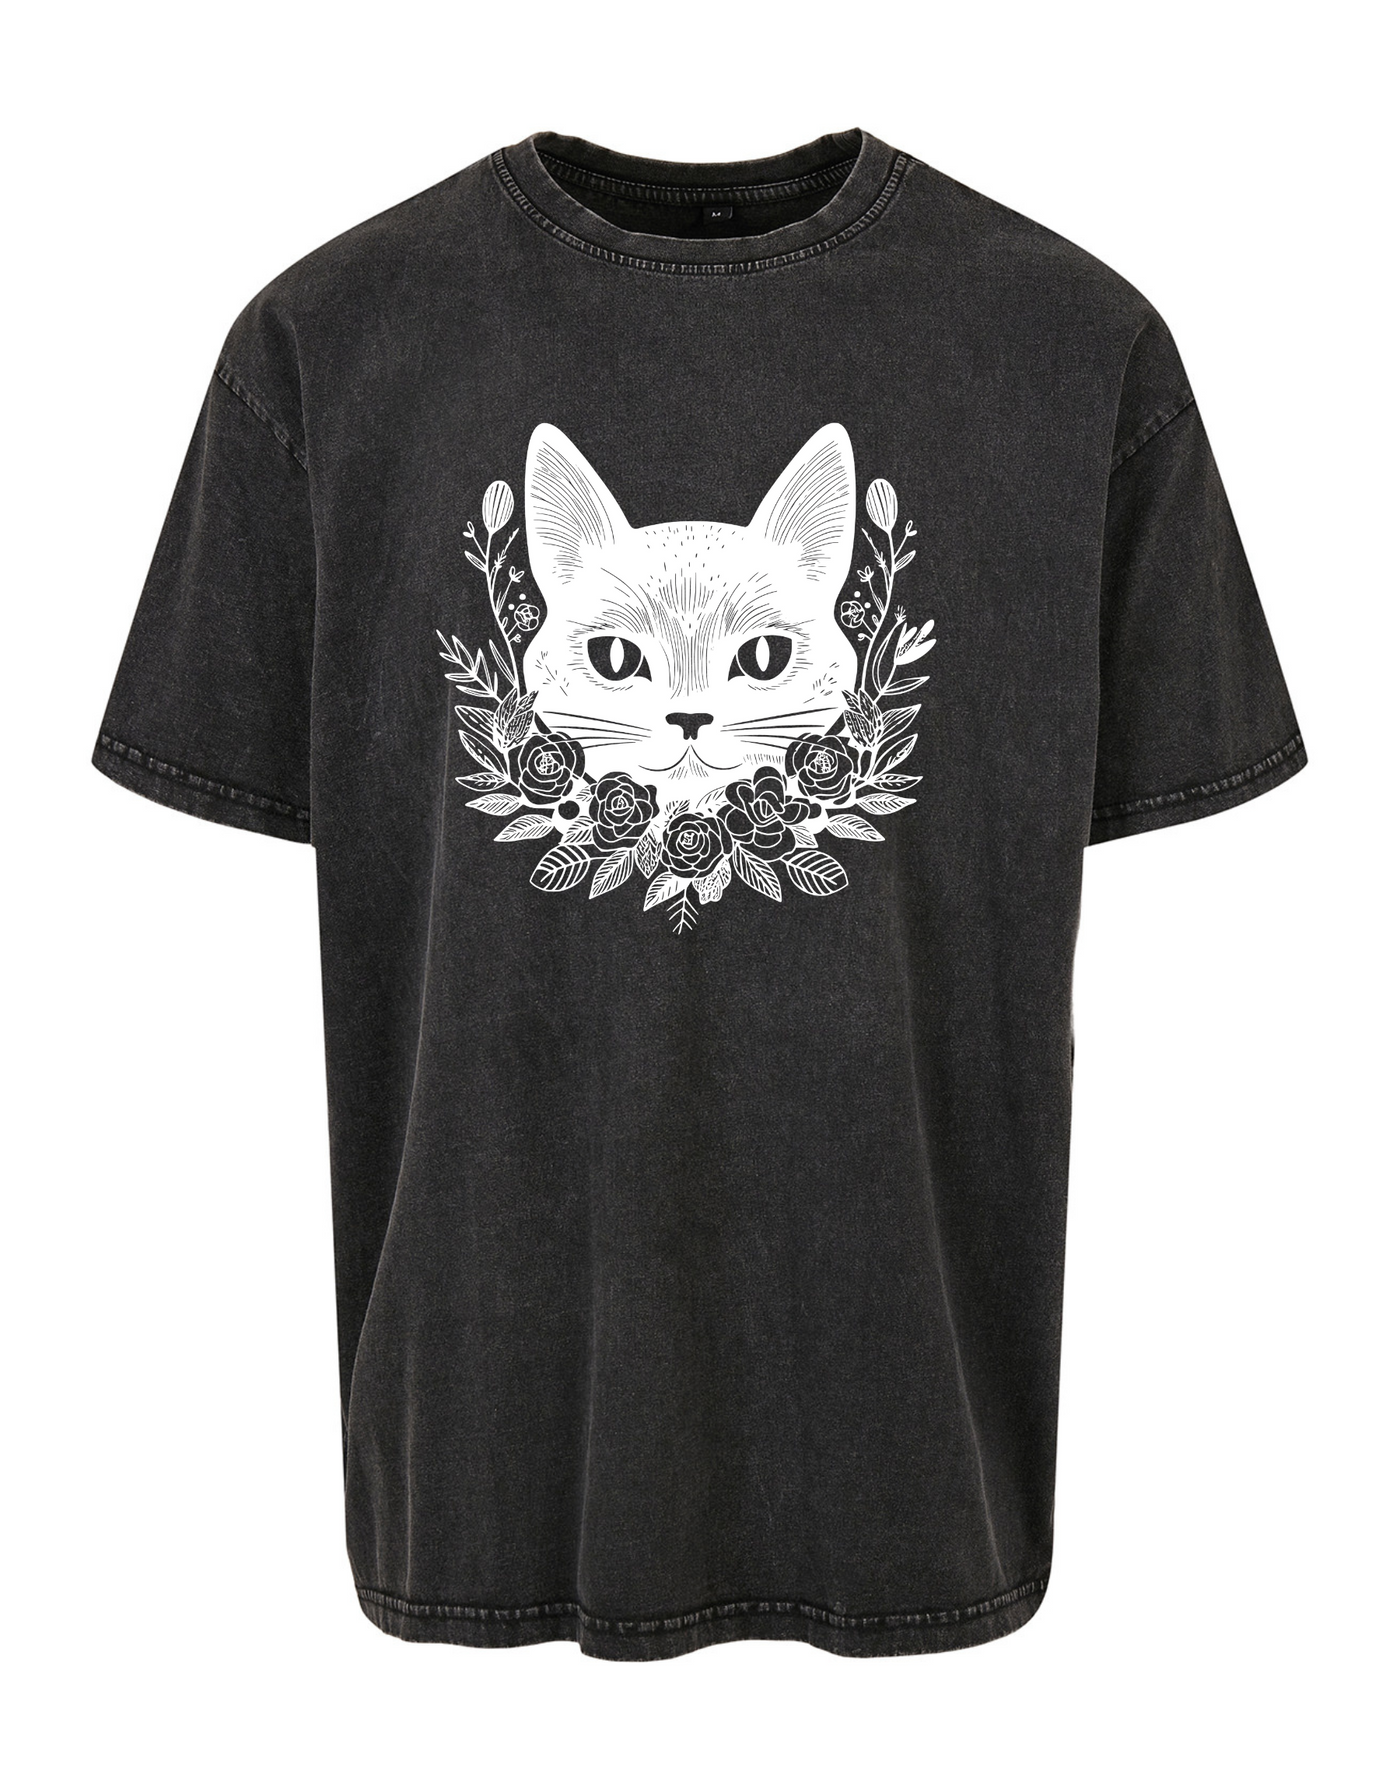 Black Cat & Roses Unisex Acid Wash T-Shirt